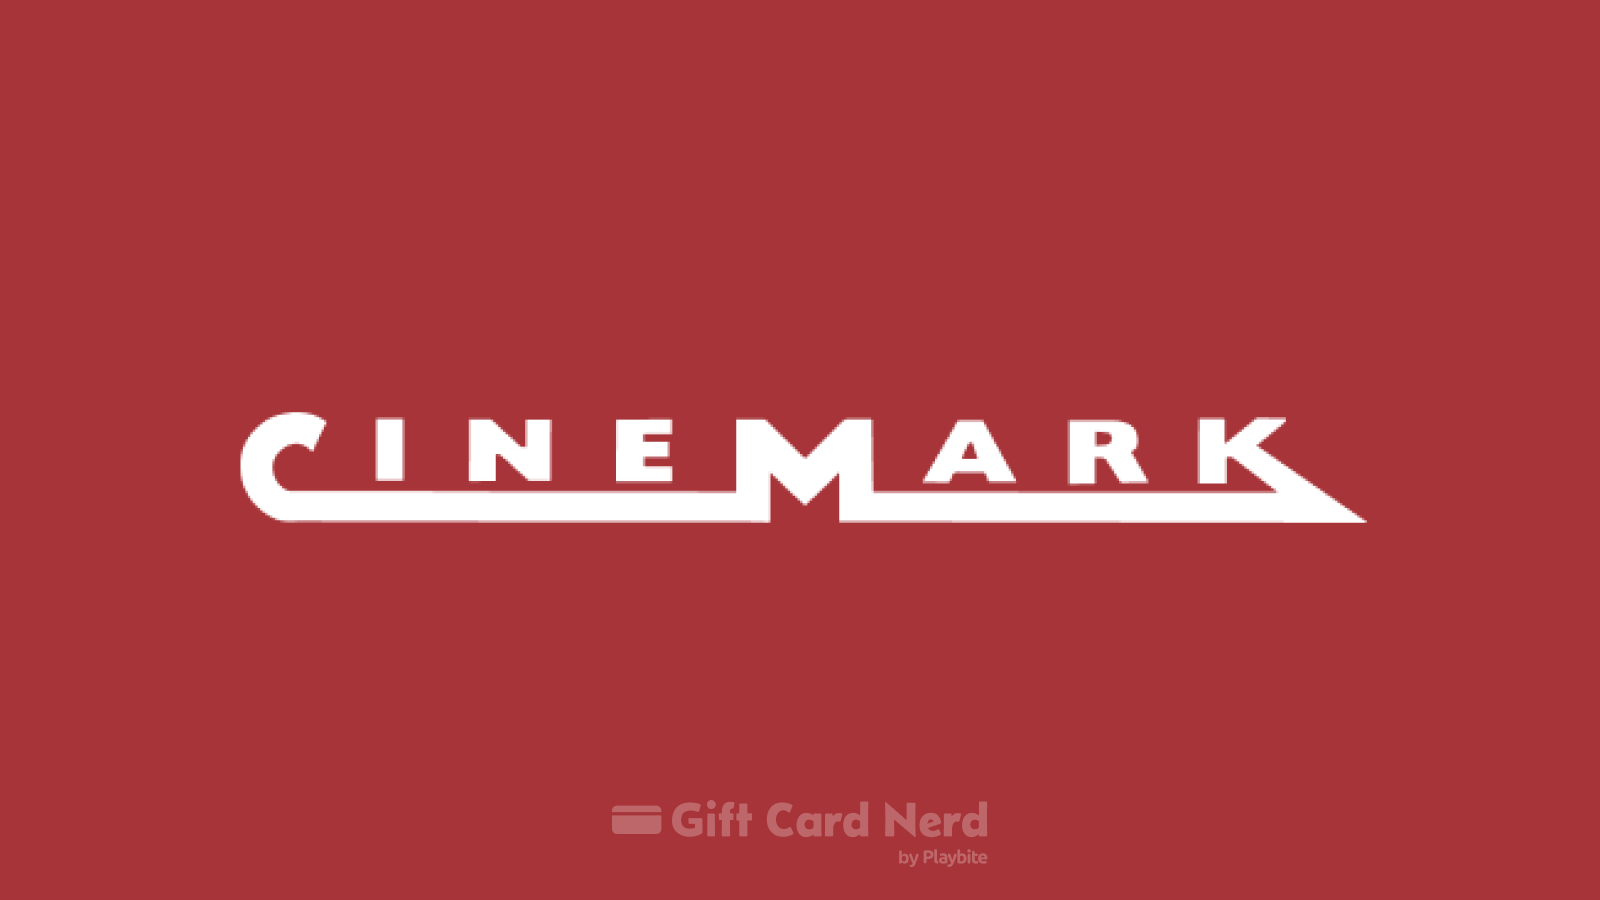 Can I use a Cinemark gift card on Grubhub?